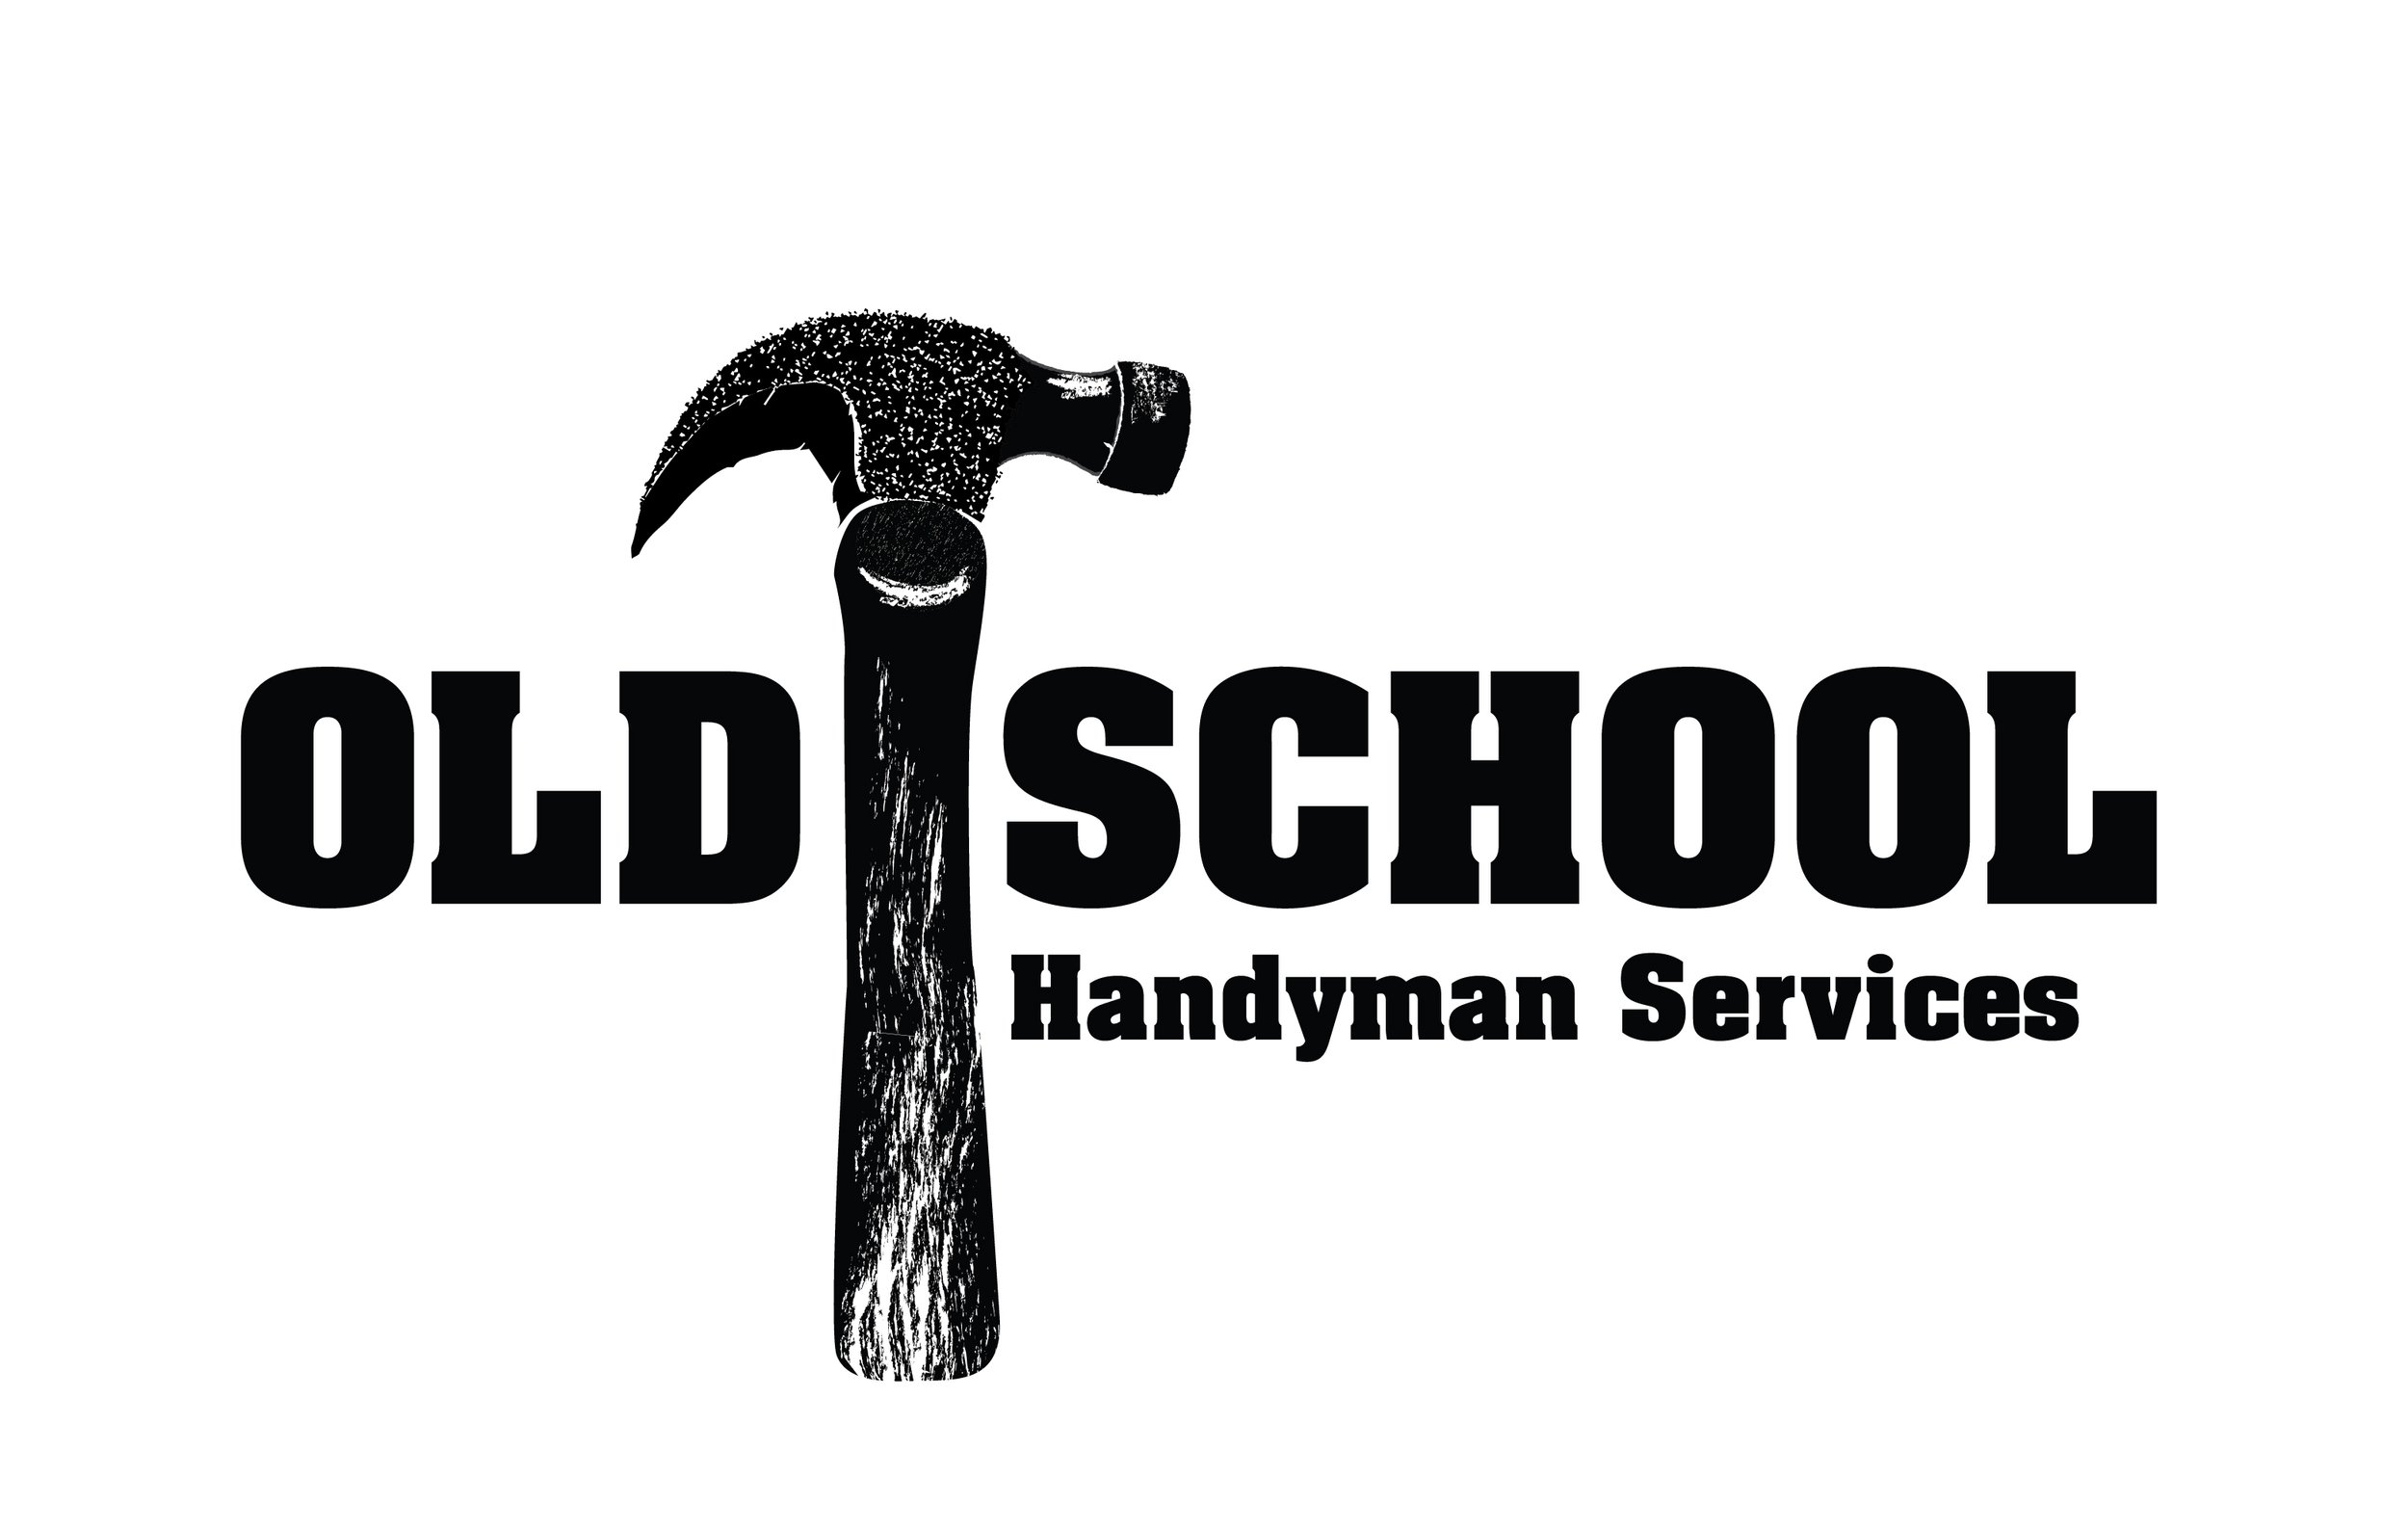 Old School Handyman Services logo with hammer